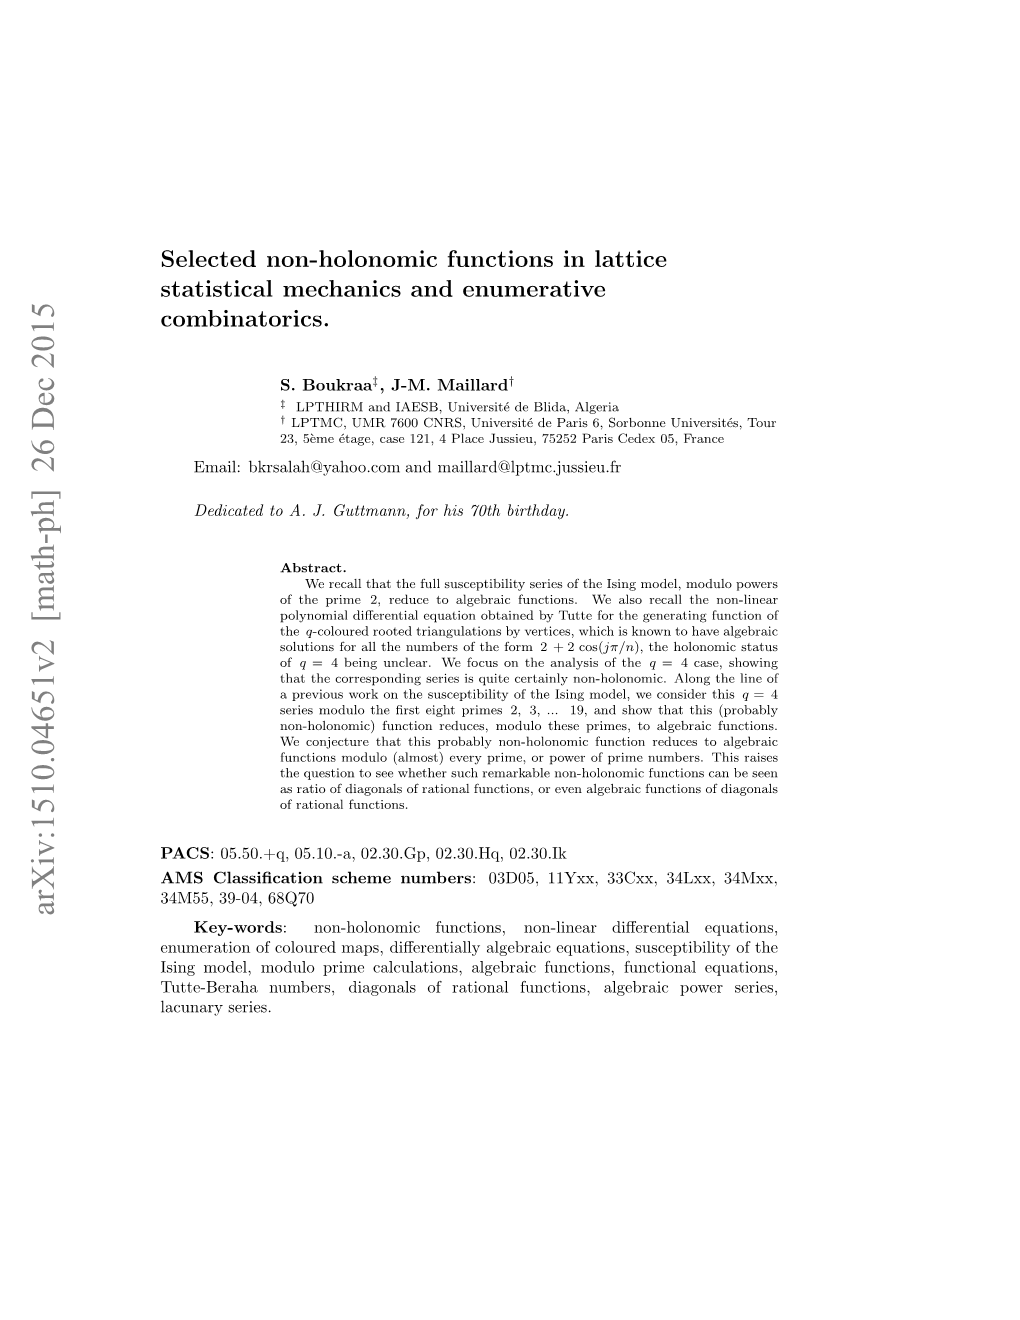 Selected Non-Holonomic Functions in Lattice Statistical Mechanics and Enumerative Combinatorics